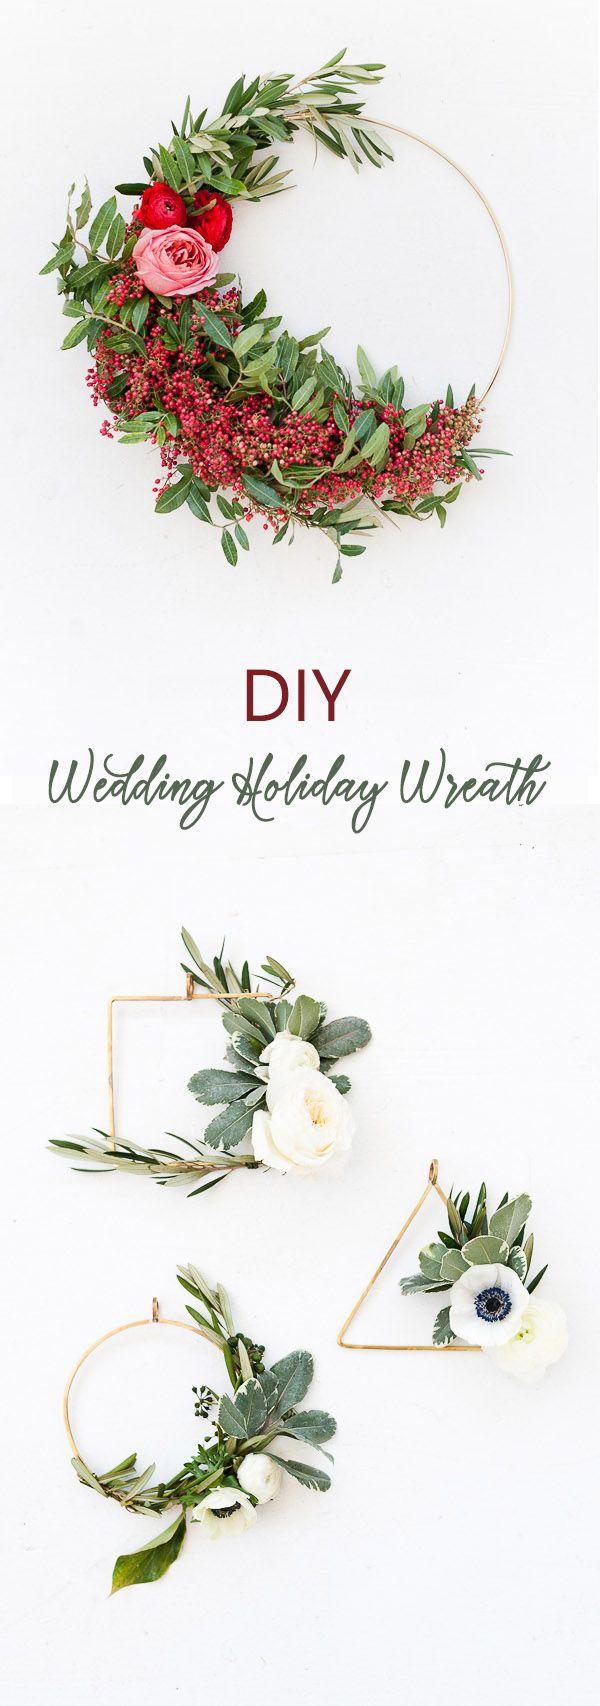 Hochzeit - 28 Creative & Budget-friendly DIY Wedding Decoration Ideas